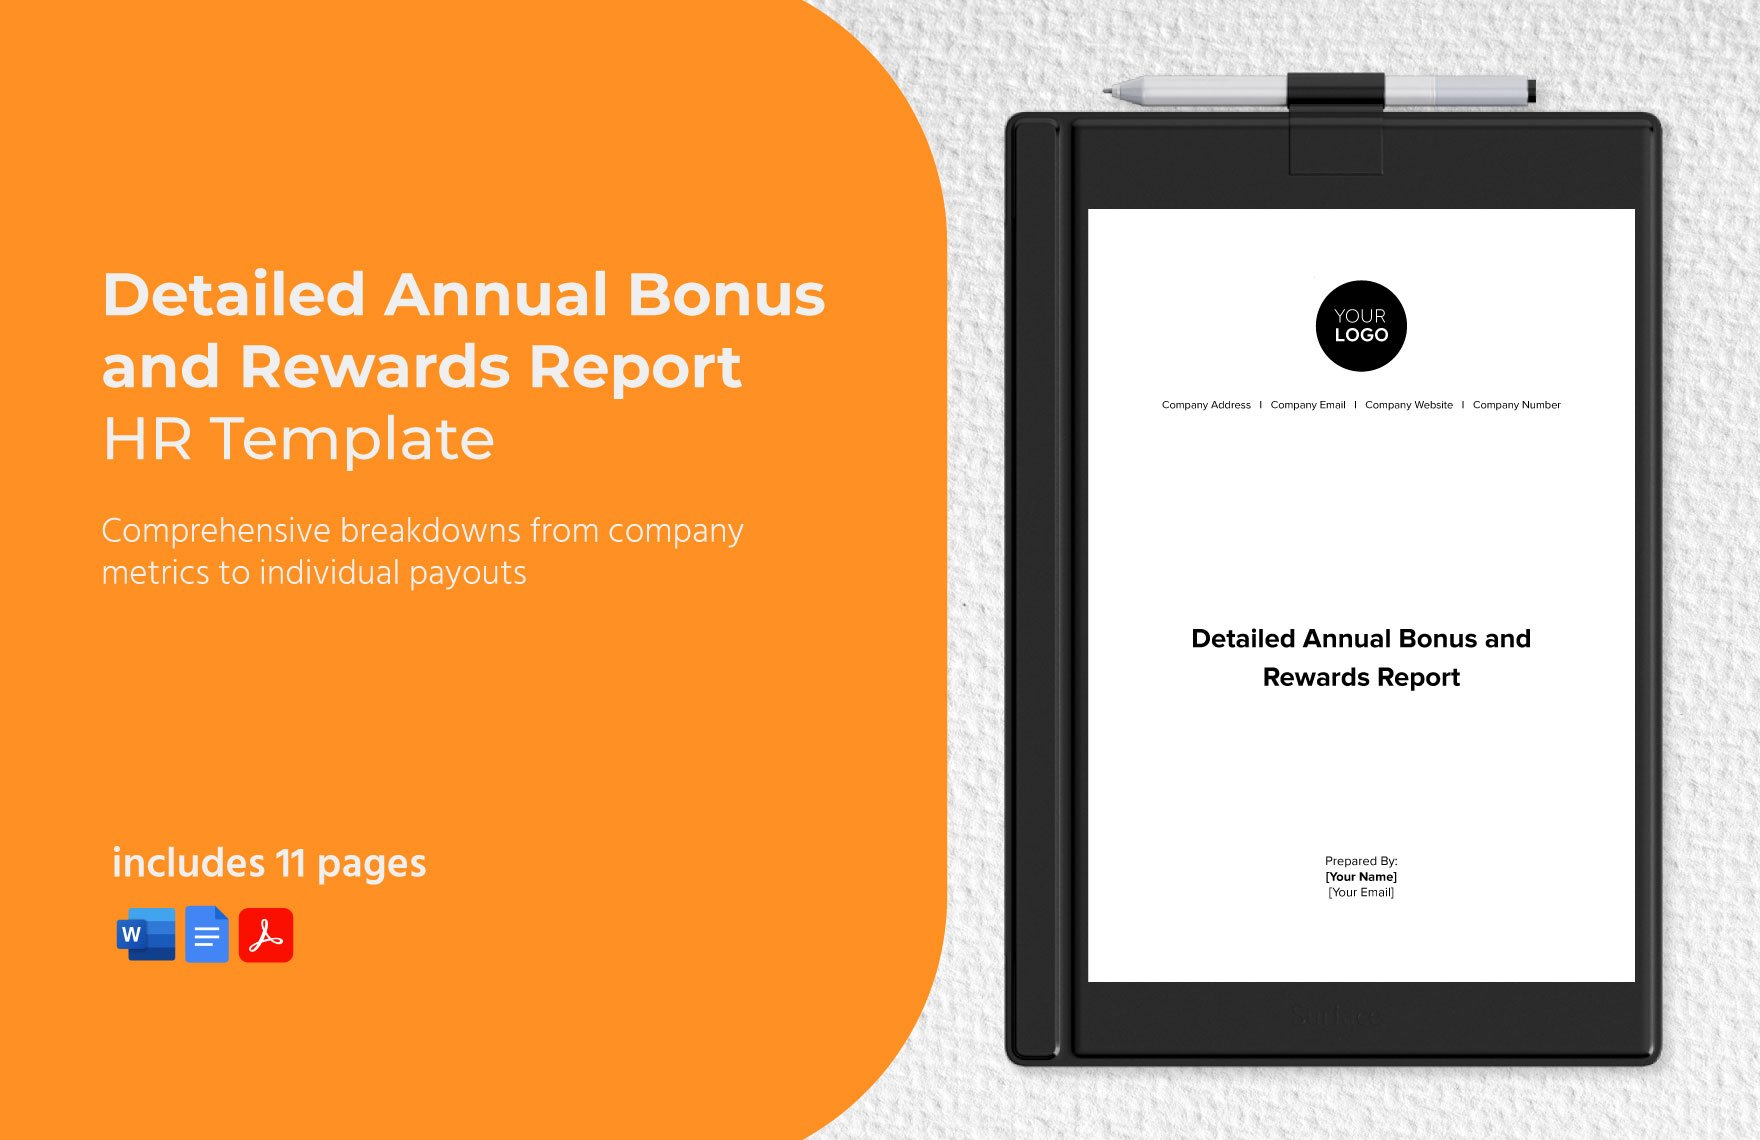 Detailed Annual Bonus and Rewards Report HR Template